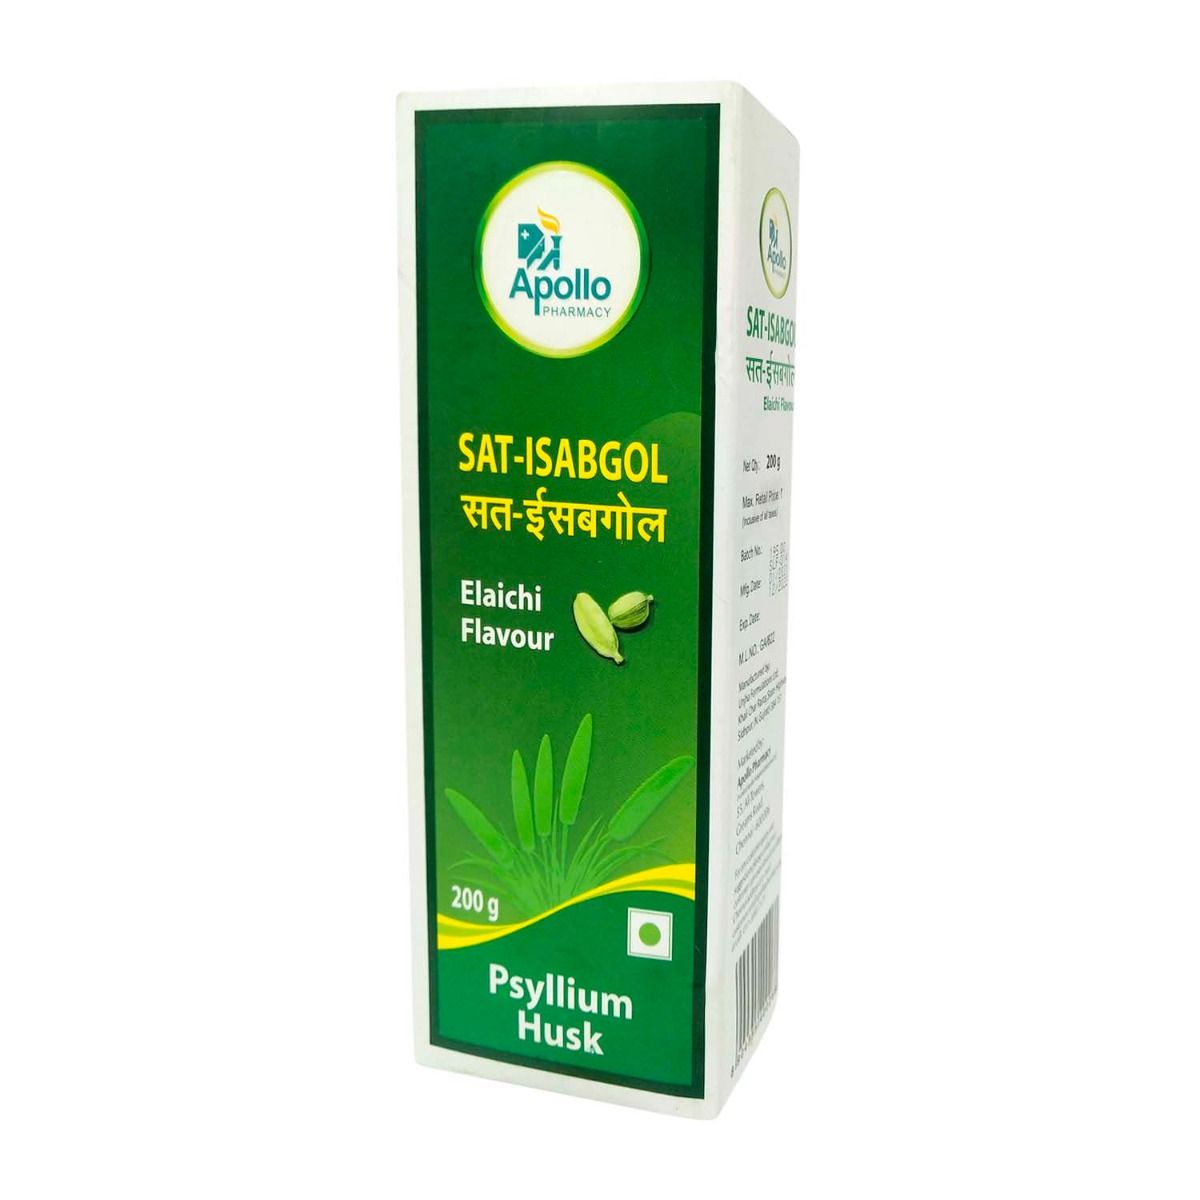 Apollo Pharmacy Elaichi Flavoured Sat Isabgol Powder, 200 gm, Pack of 1 